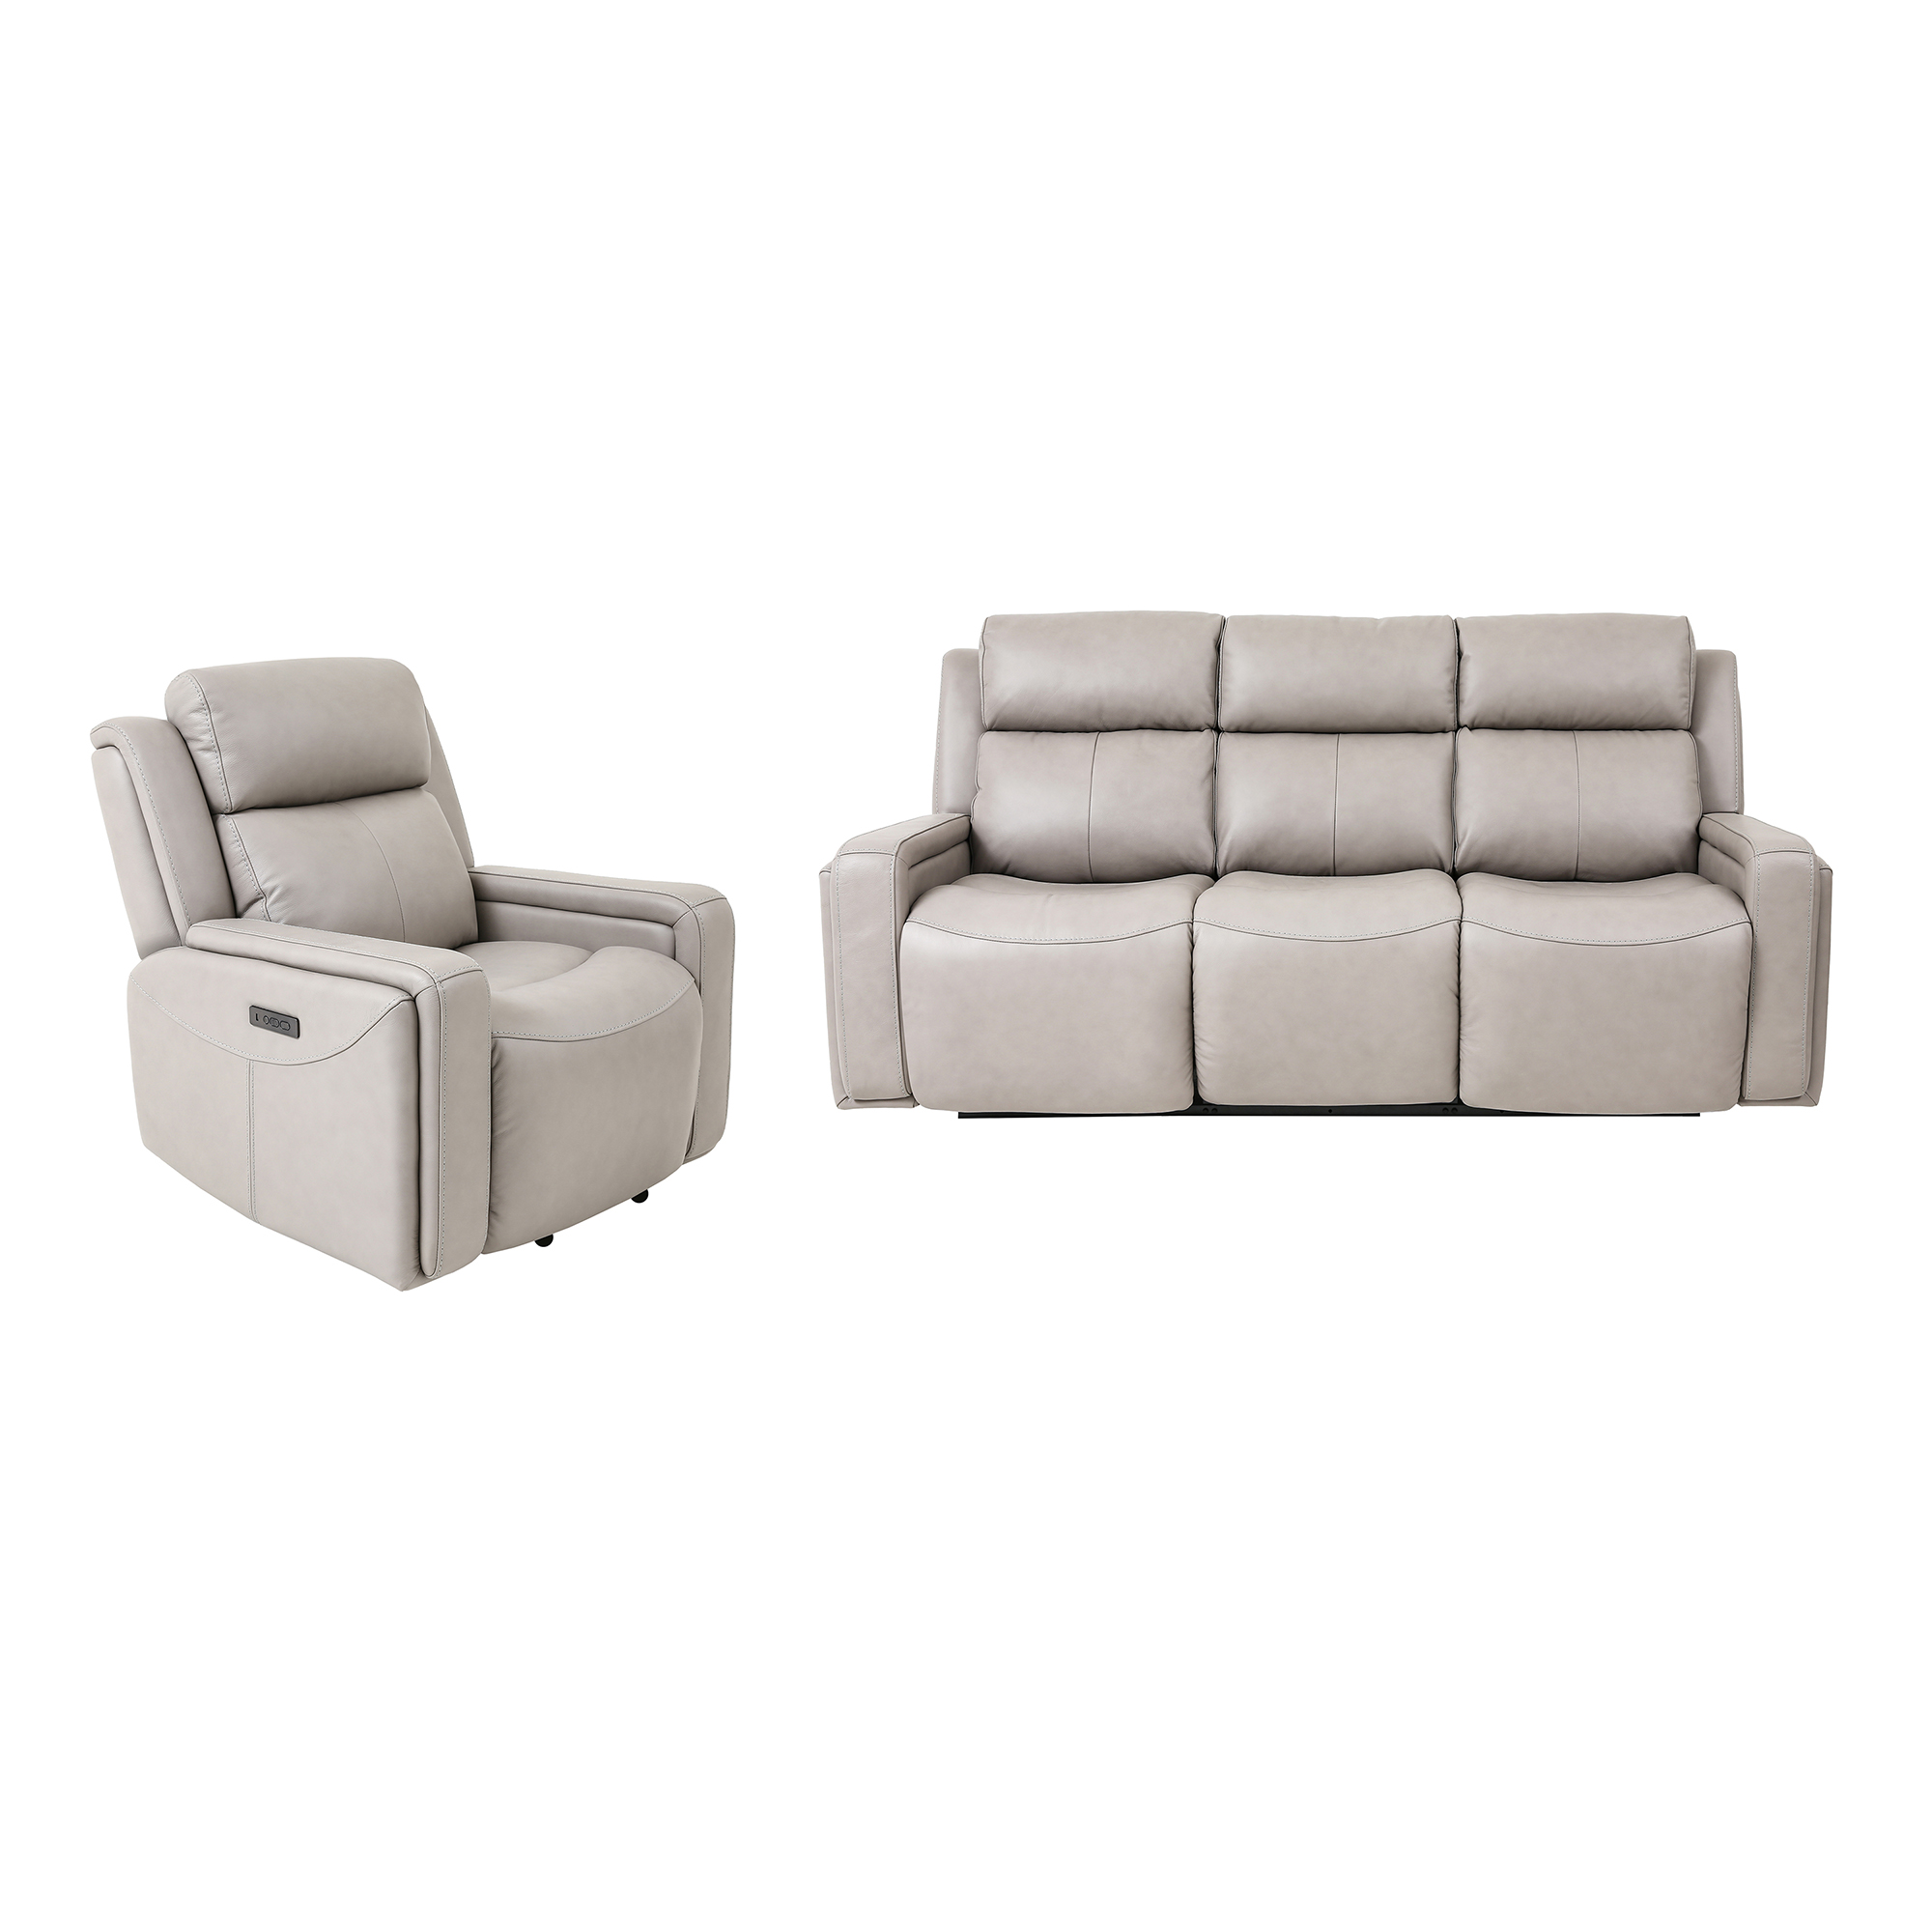 https://www.homethreads.com/files/armen-living/setclgry2pc-reclining-2-piece-sofa-and-recliner-set.jpg